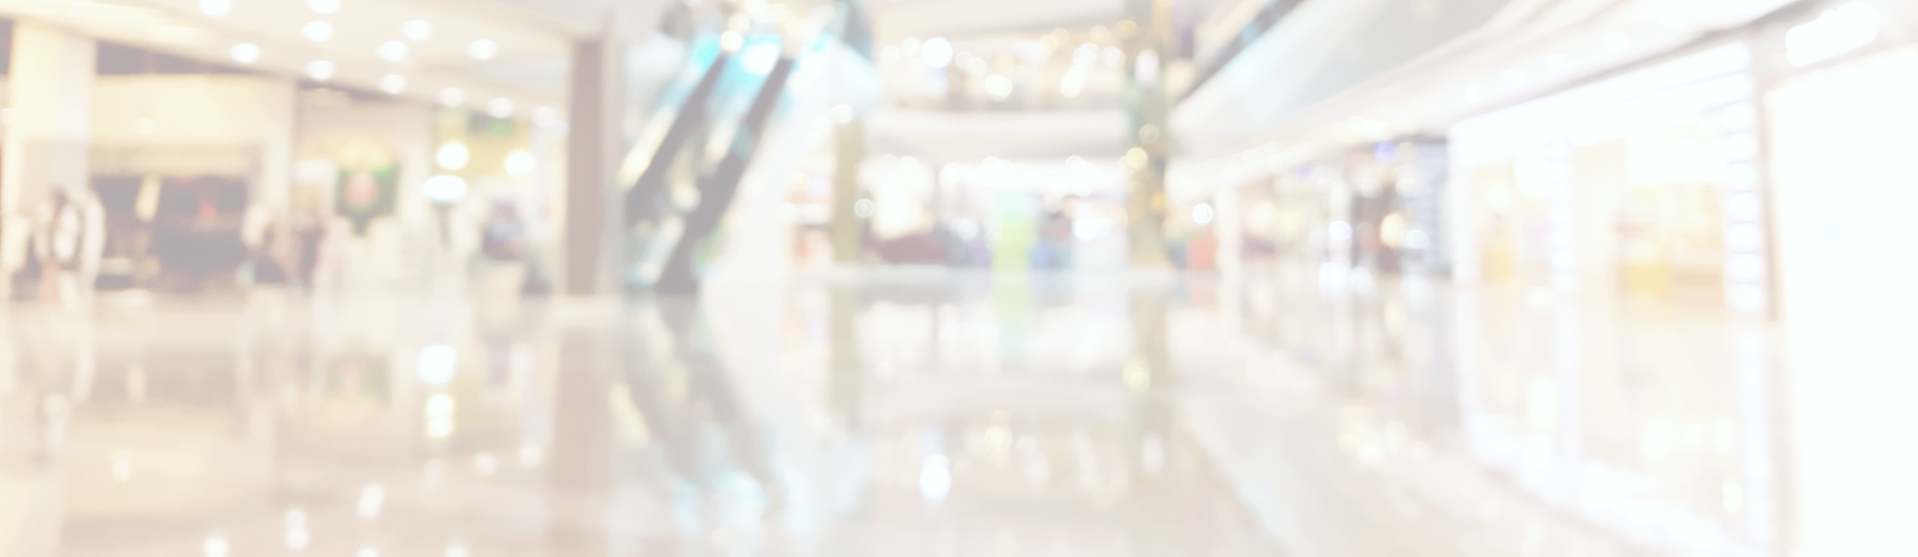 Photo of mall hallway